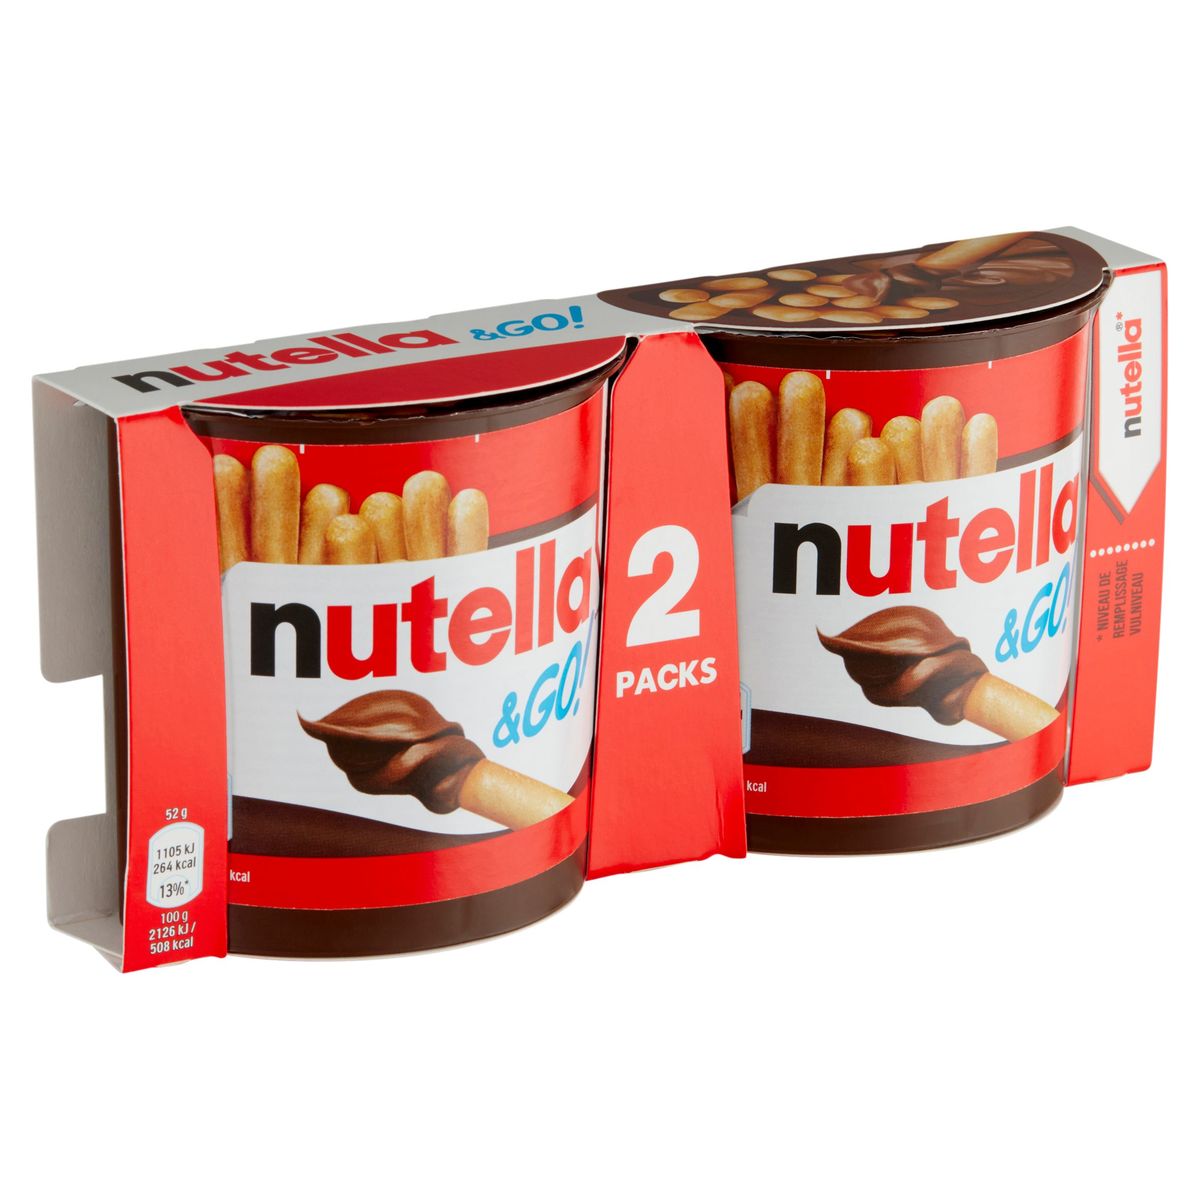 Nutella & Go! 2 Pack